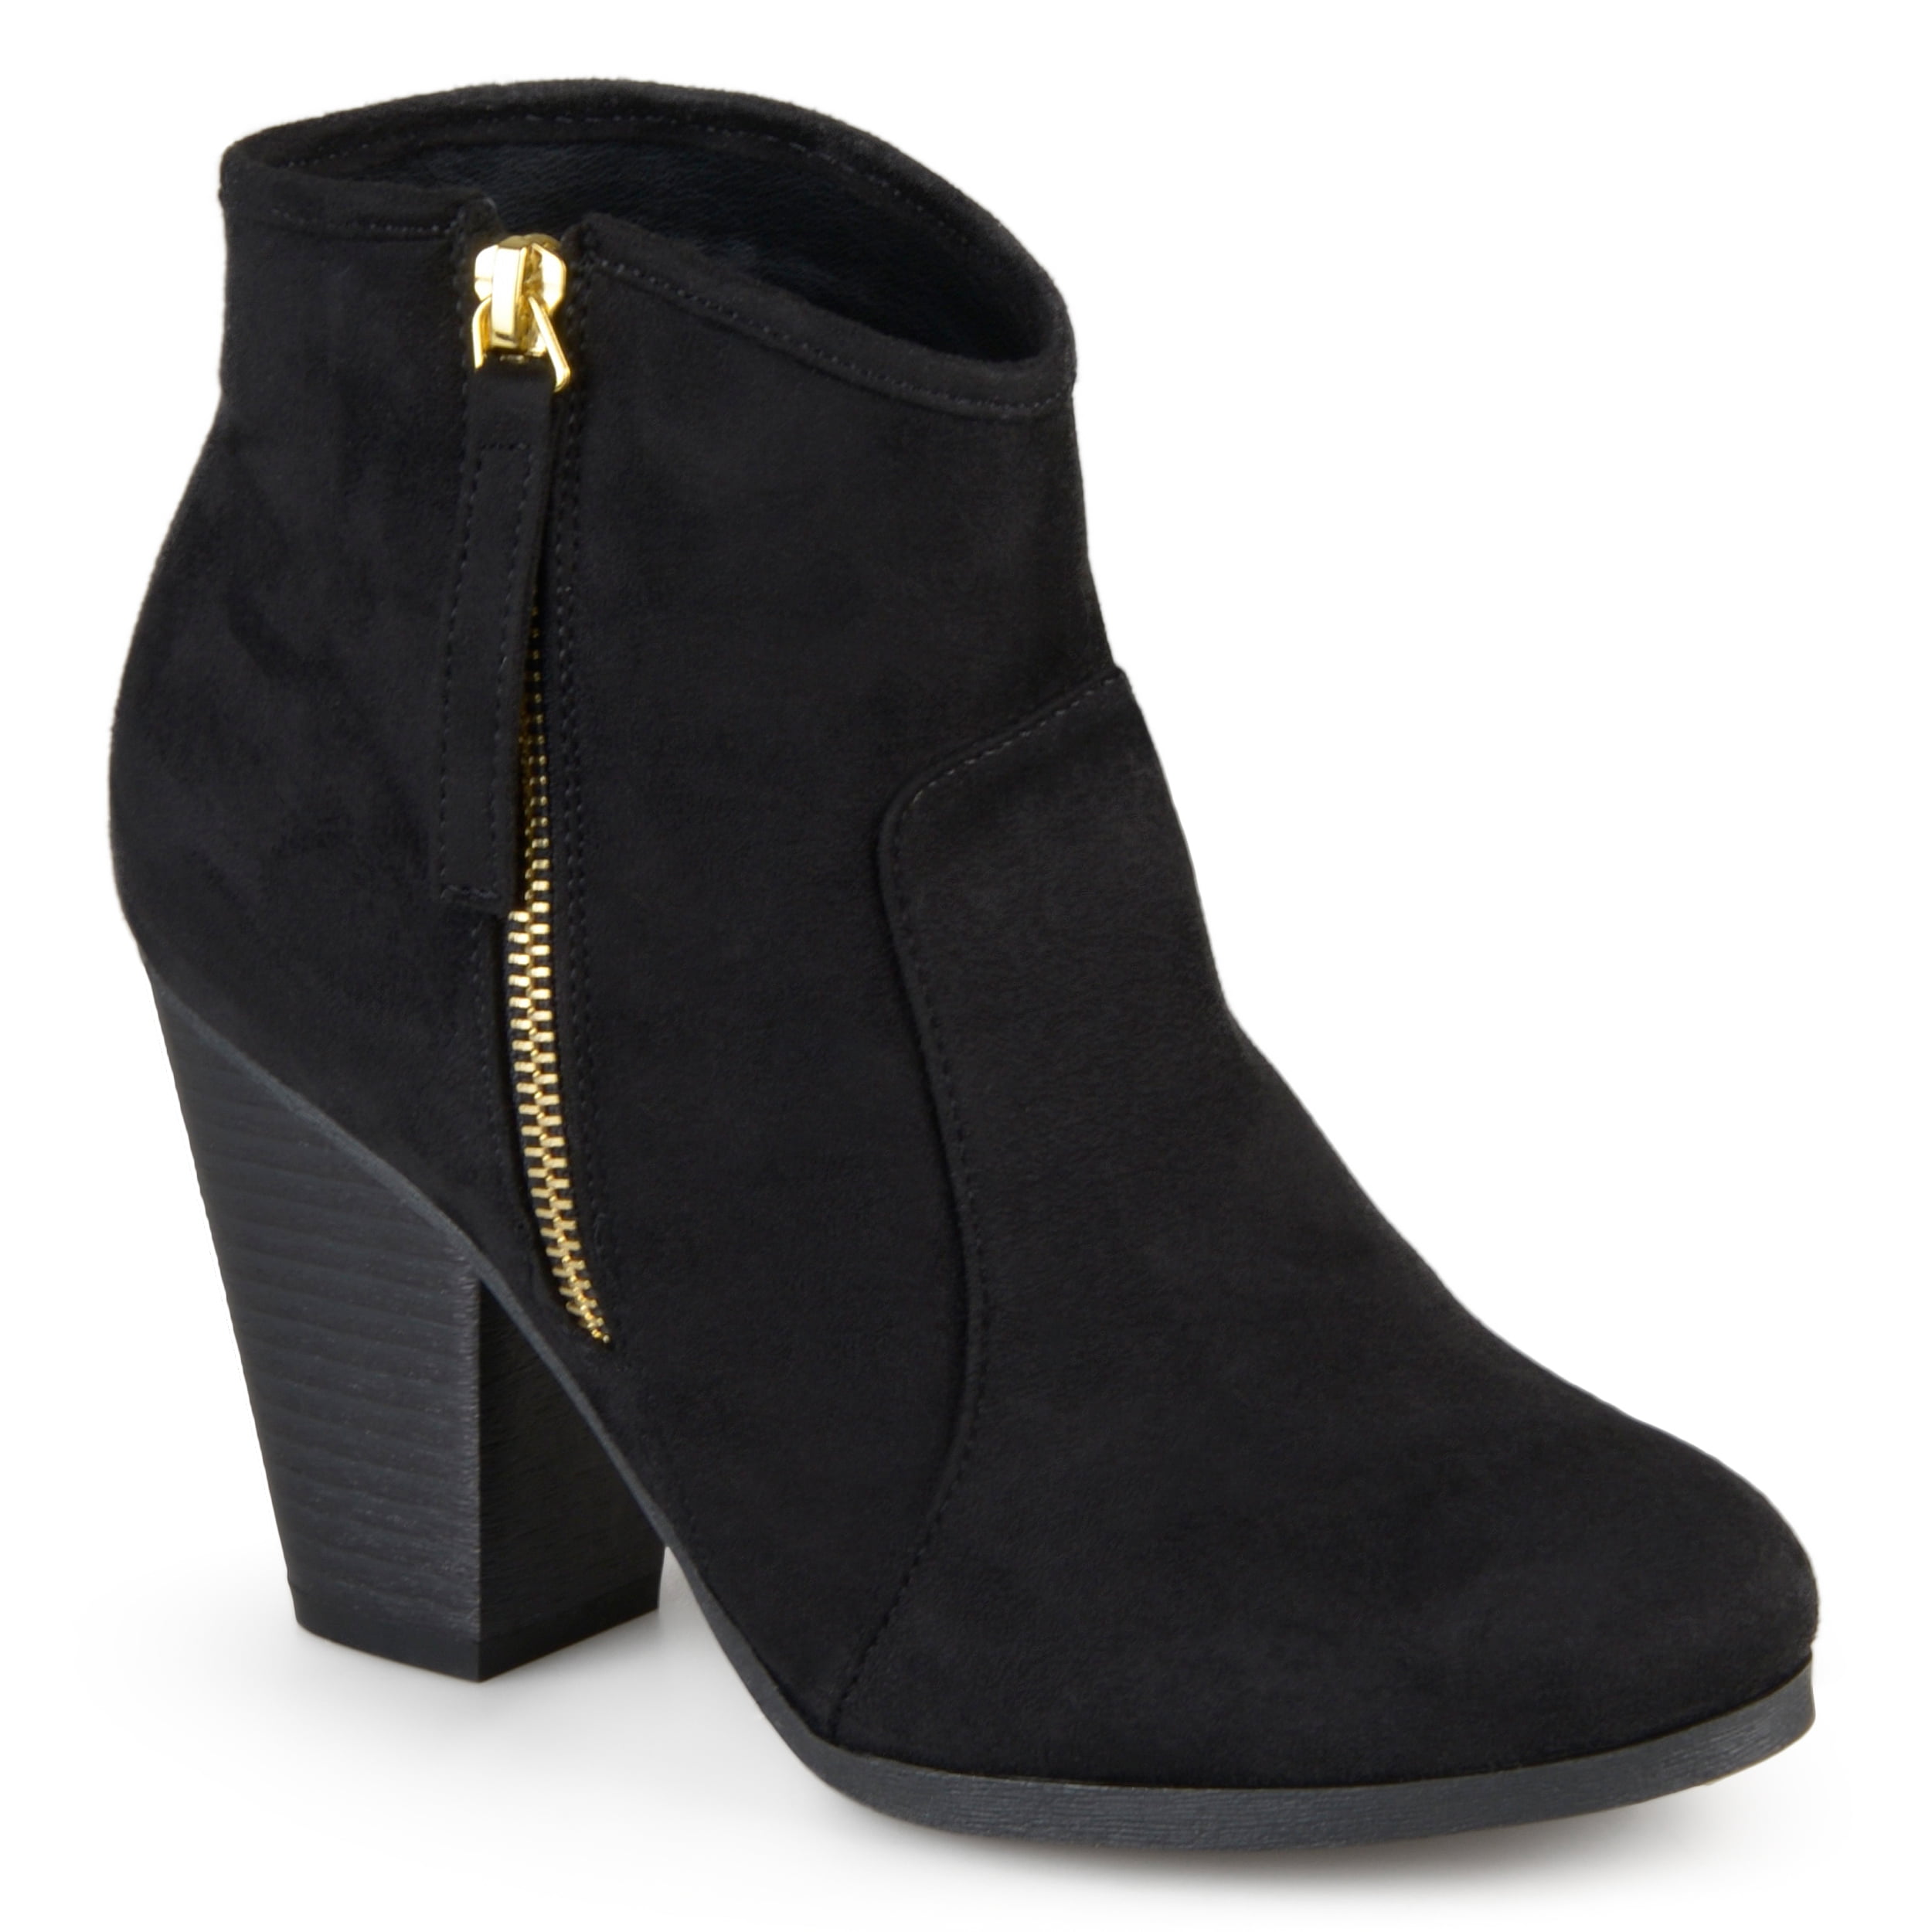 FORUU Fashion Women Pointed Toe Suede High Heel Wedges Shoes Martin Boots Zipper Boot